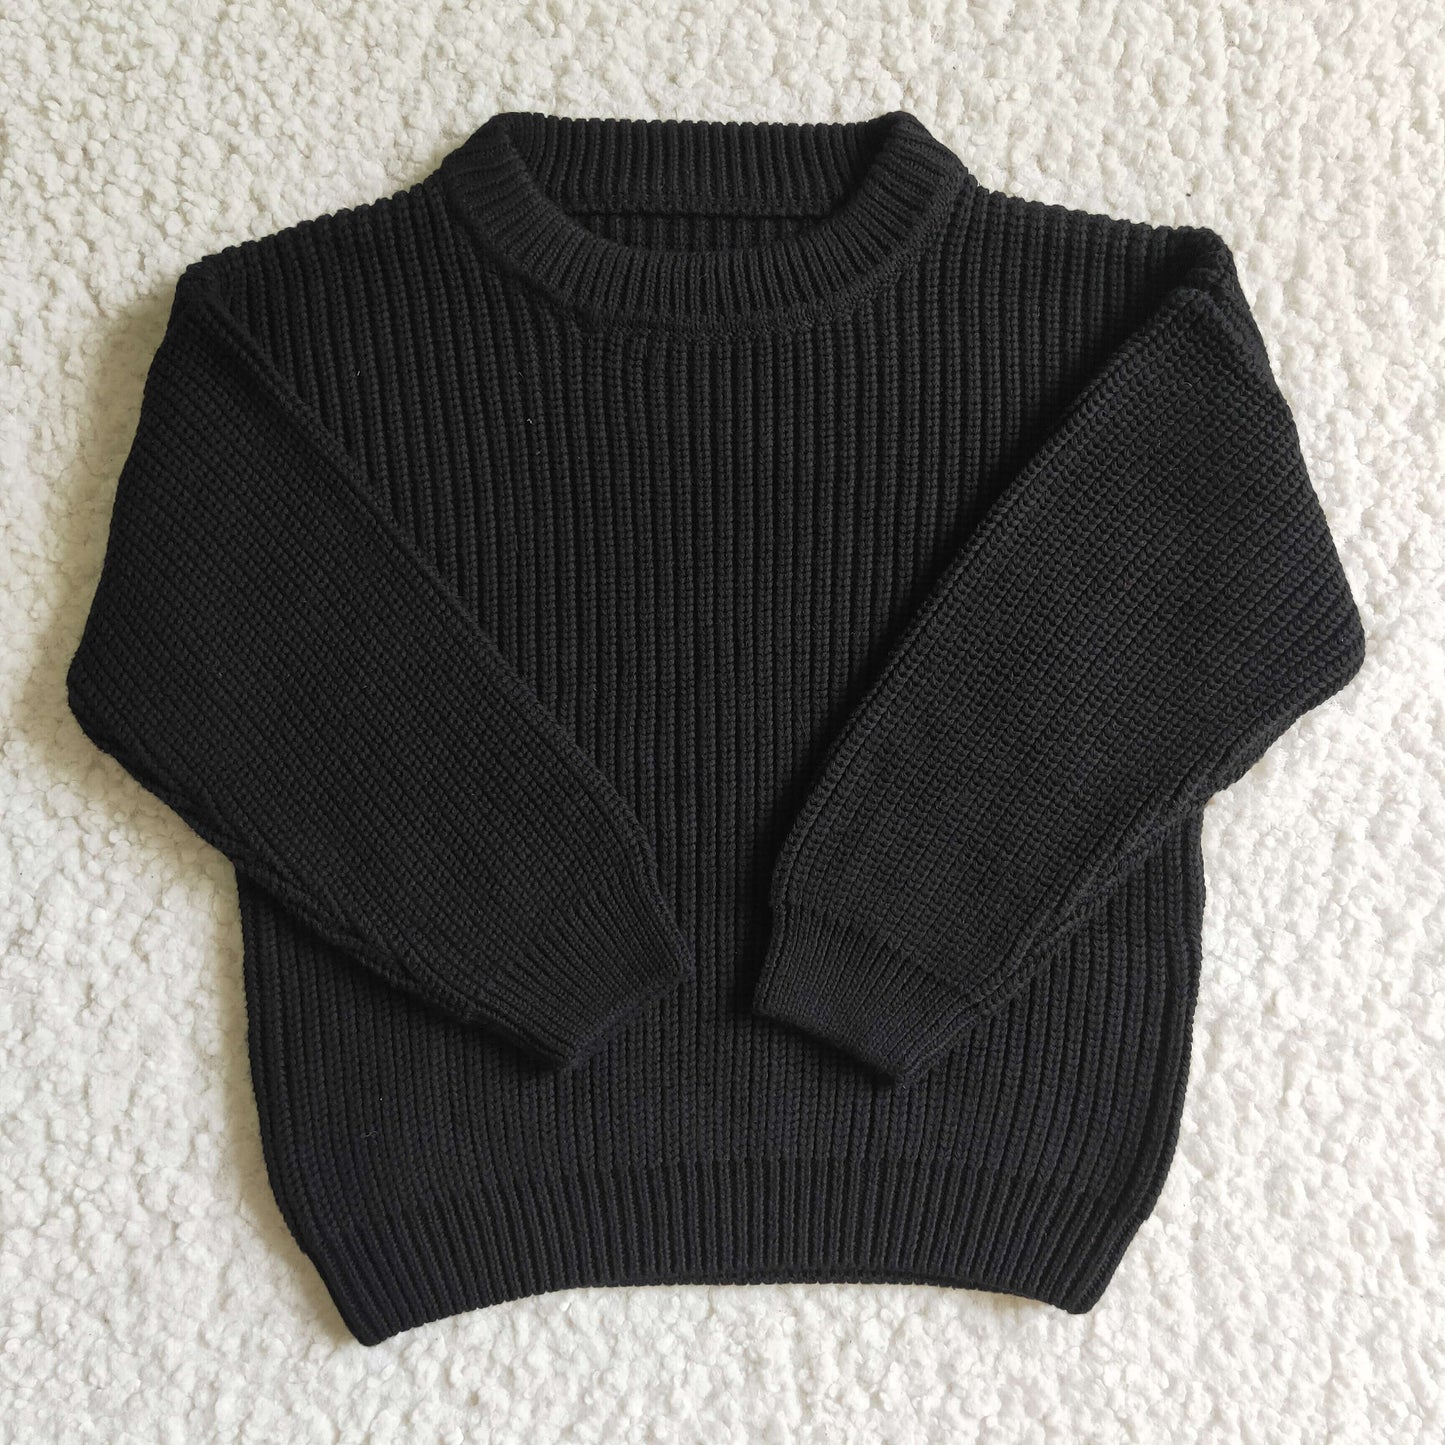 Black cotton winter sweater